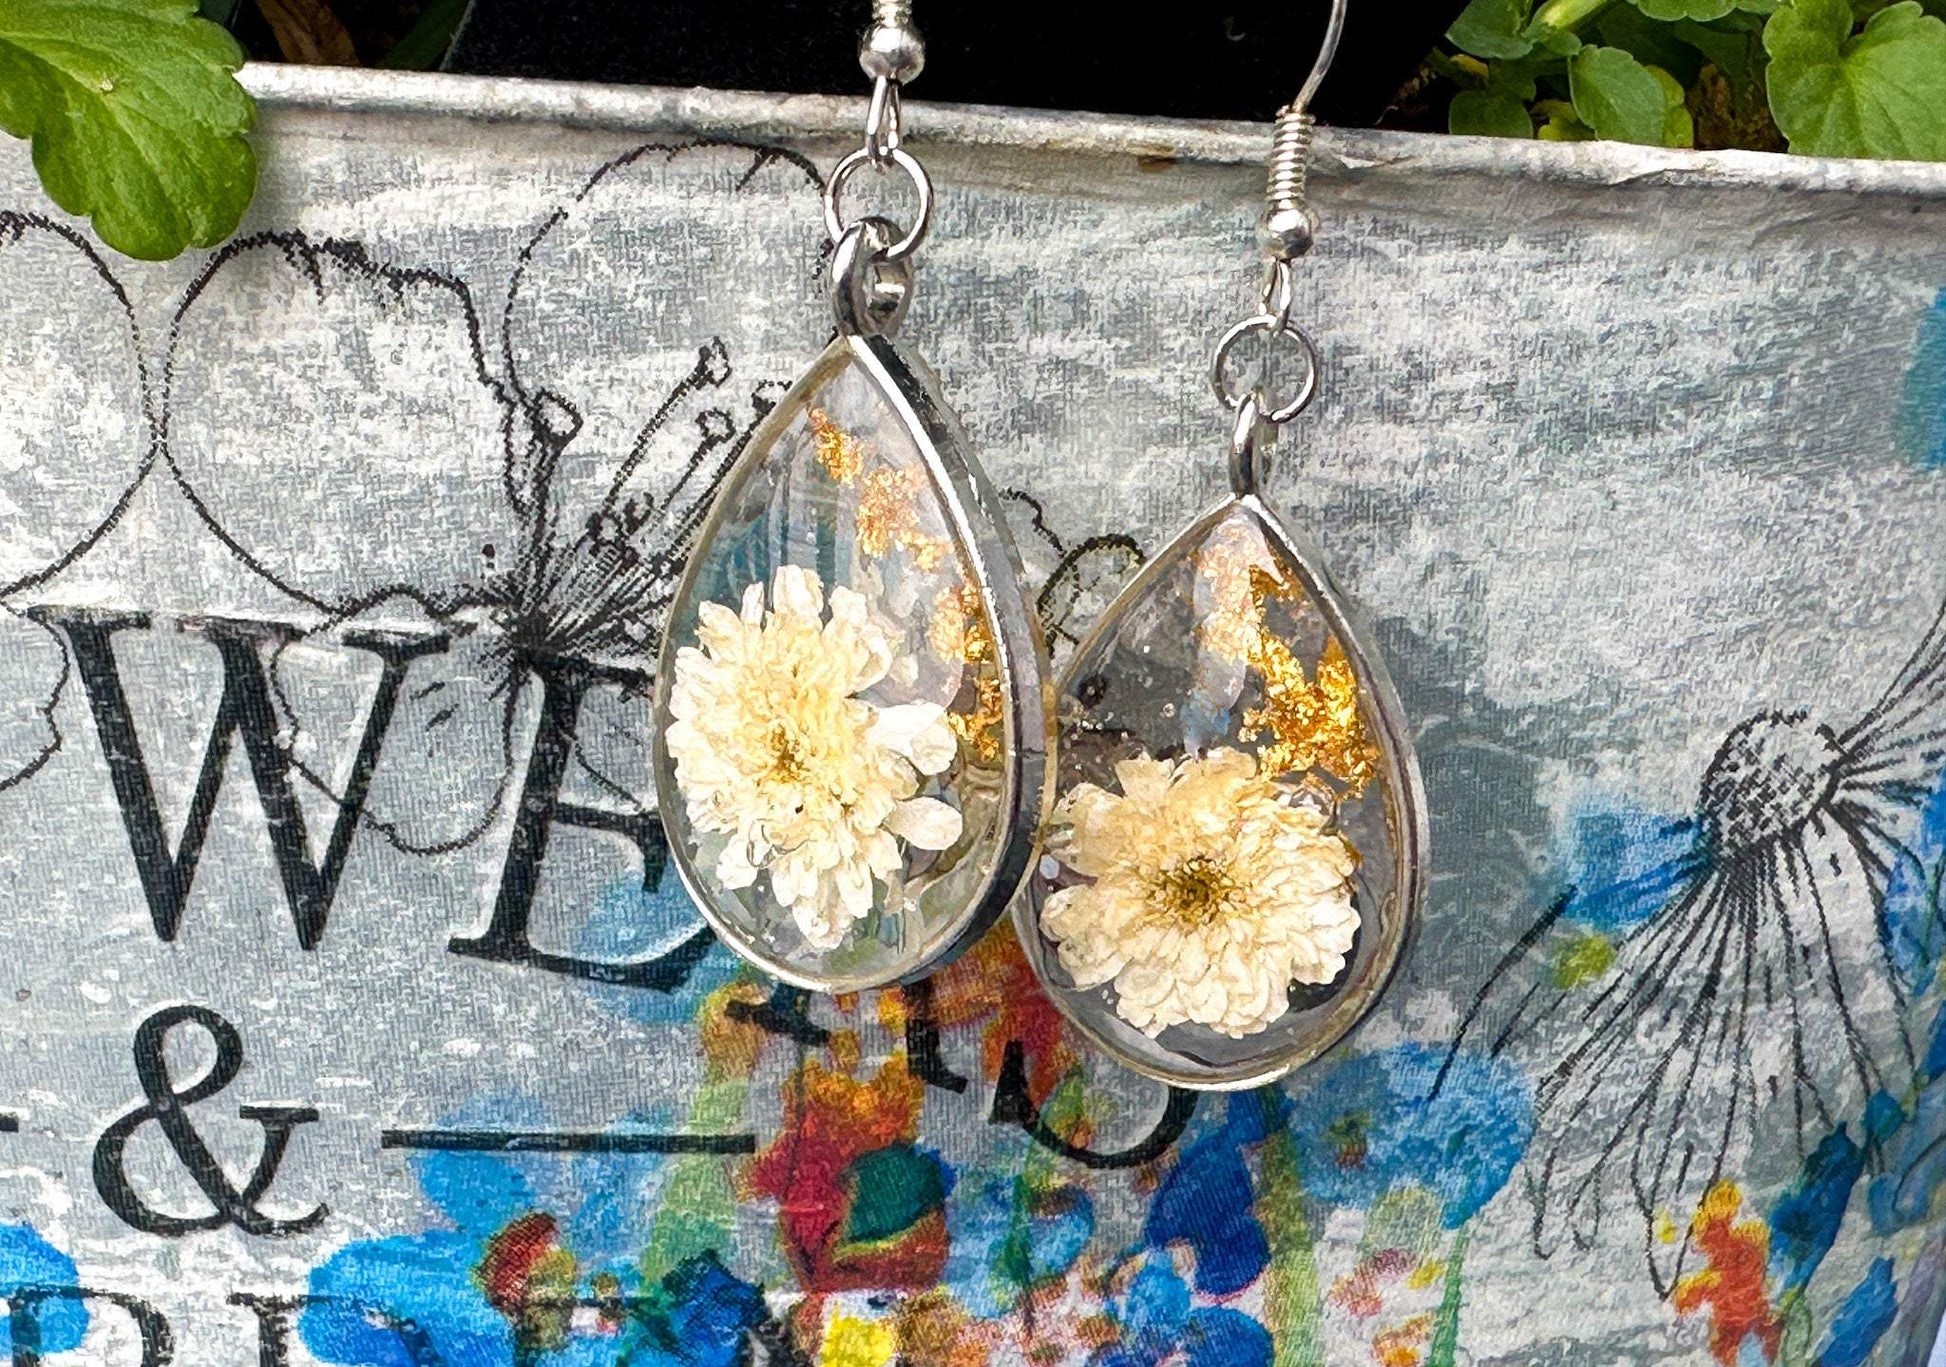 White Petal Dew Drop Floral Earring Set - Handmade with Pressed Flower